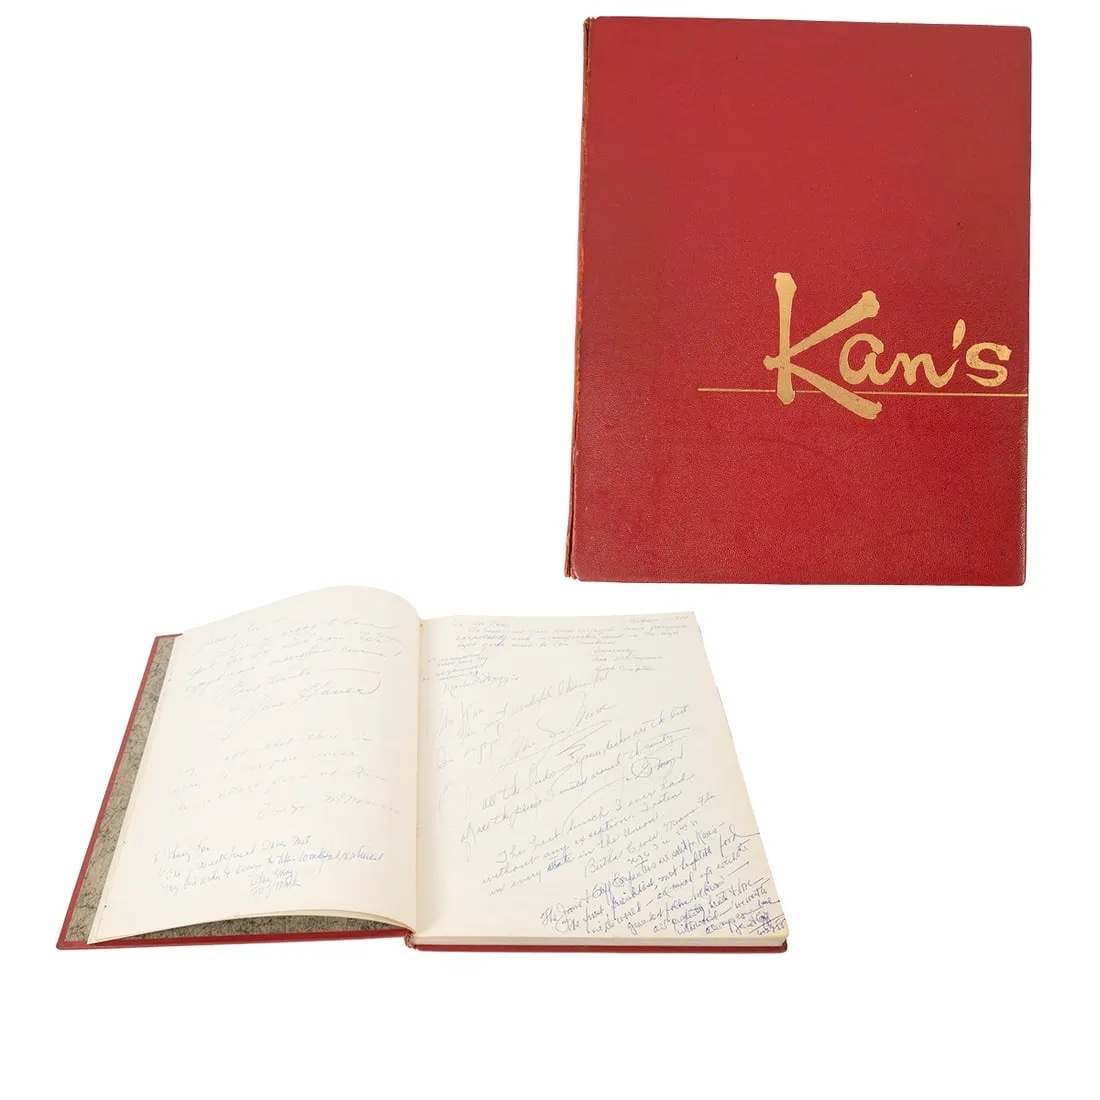 Kan's Restaurant autograph book, $16,000 ($20,800 with buyer's premium) at Michaan's.